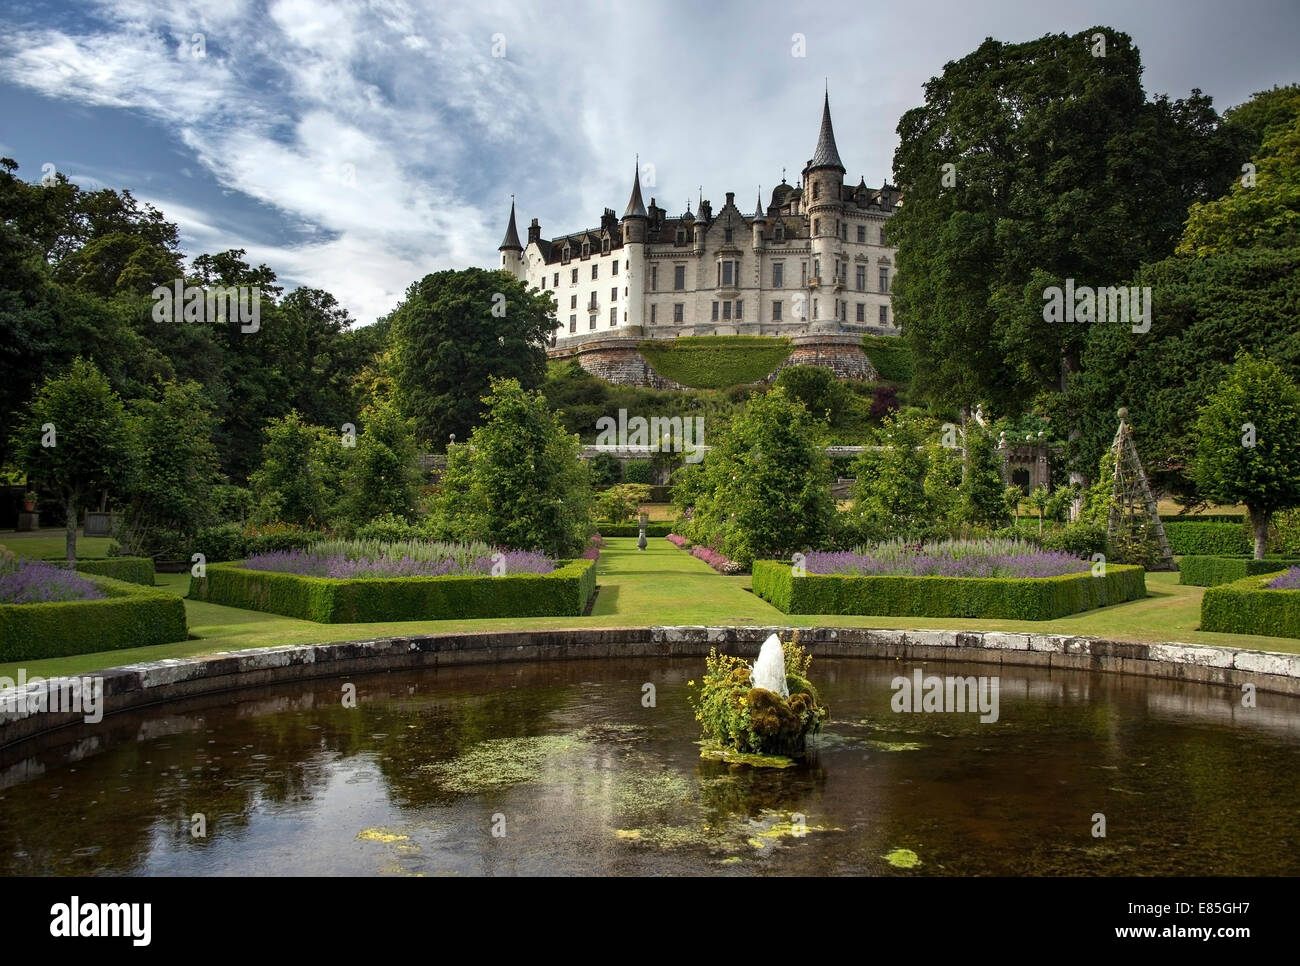 Dunrobin Castle and Gardens, près de Golspie, Sutherland, Highland, Scotland Banque D'Images